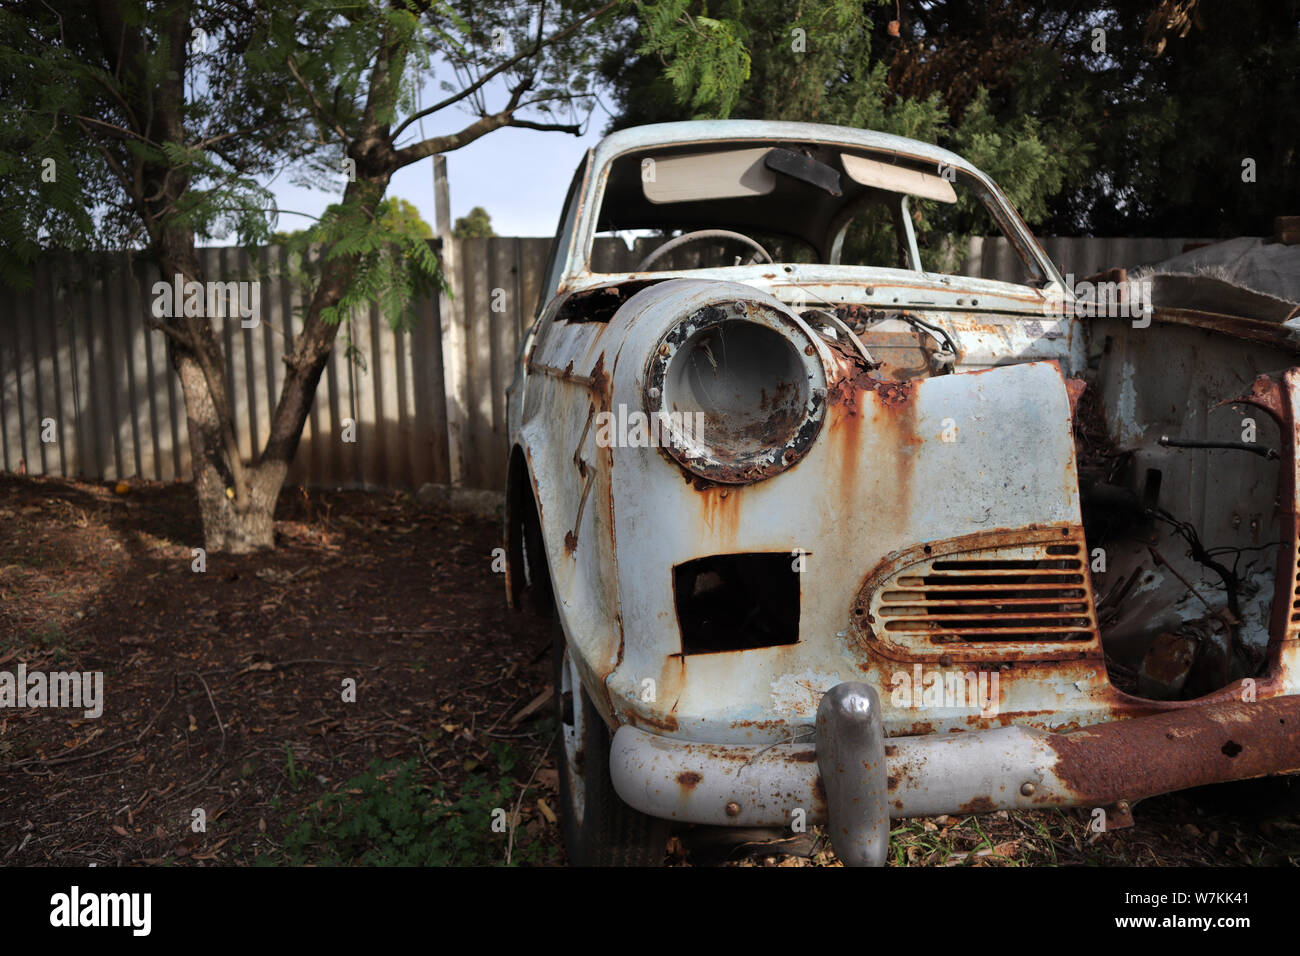 21+ Thousand Crashed Old Car Royalty-Free Images, Stock Photos